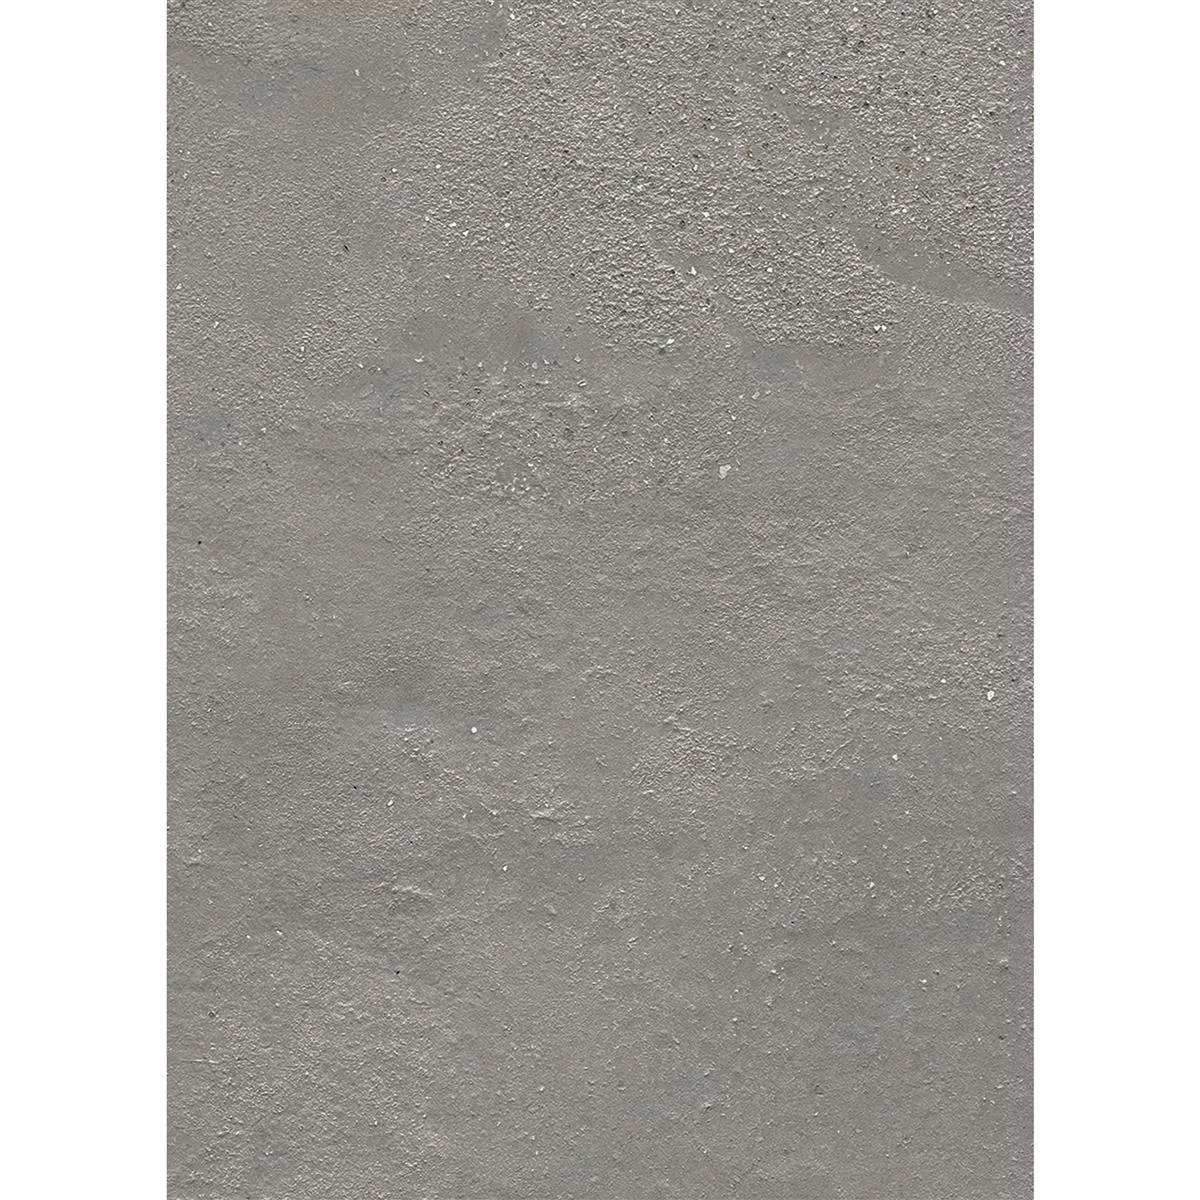 Muestra Pavimento Malibu Aspecto De Concreto Gris Claro 60x120cm